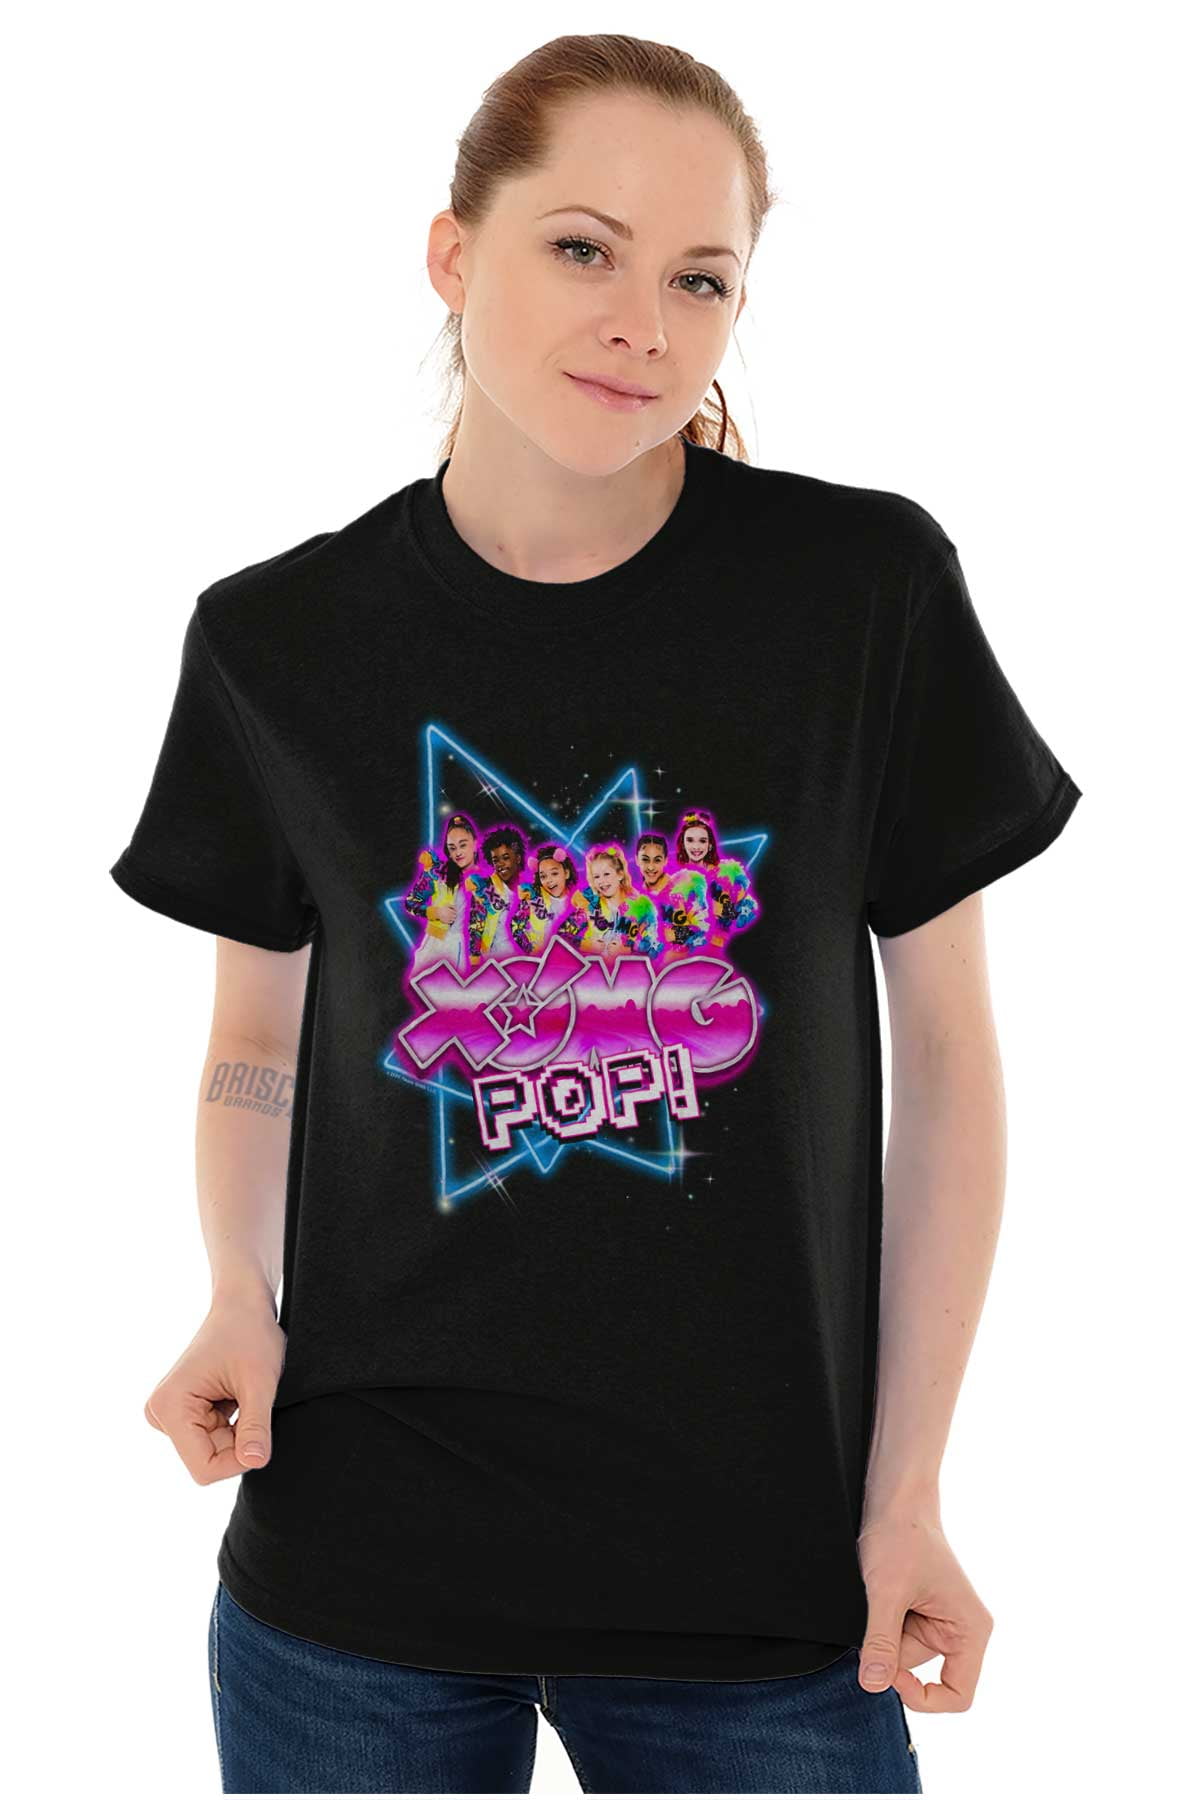 XOMG POP Band Neon Space Rockstars Women's Graphic T Shirt Tees Brisco ...